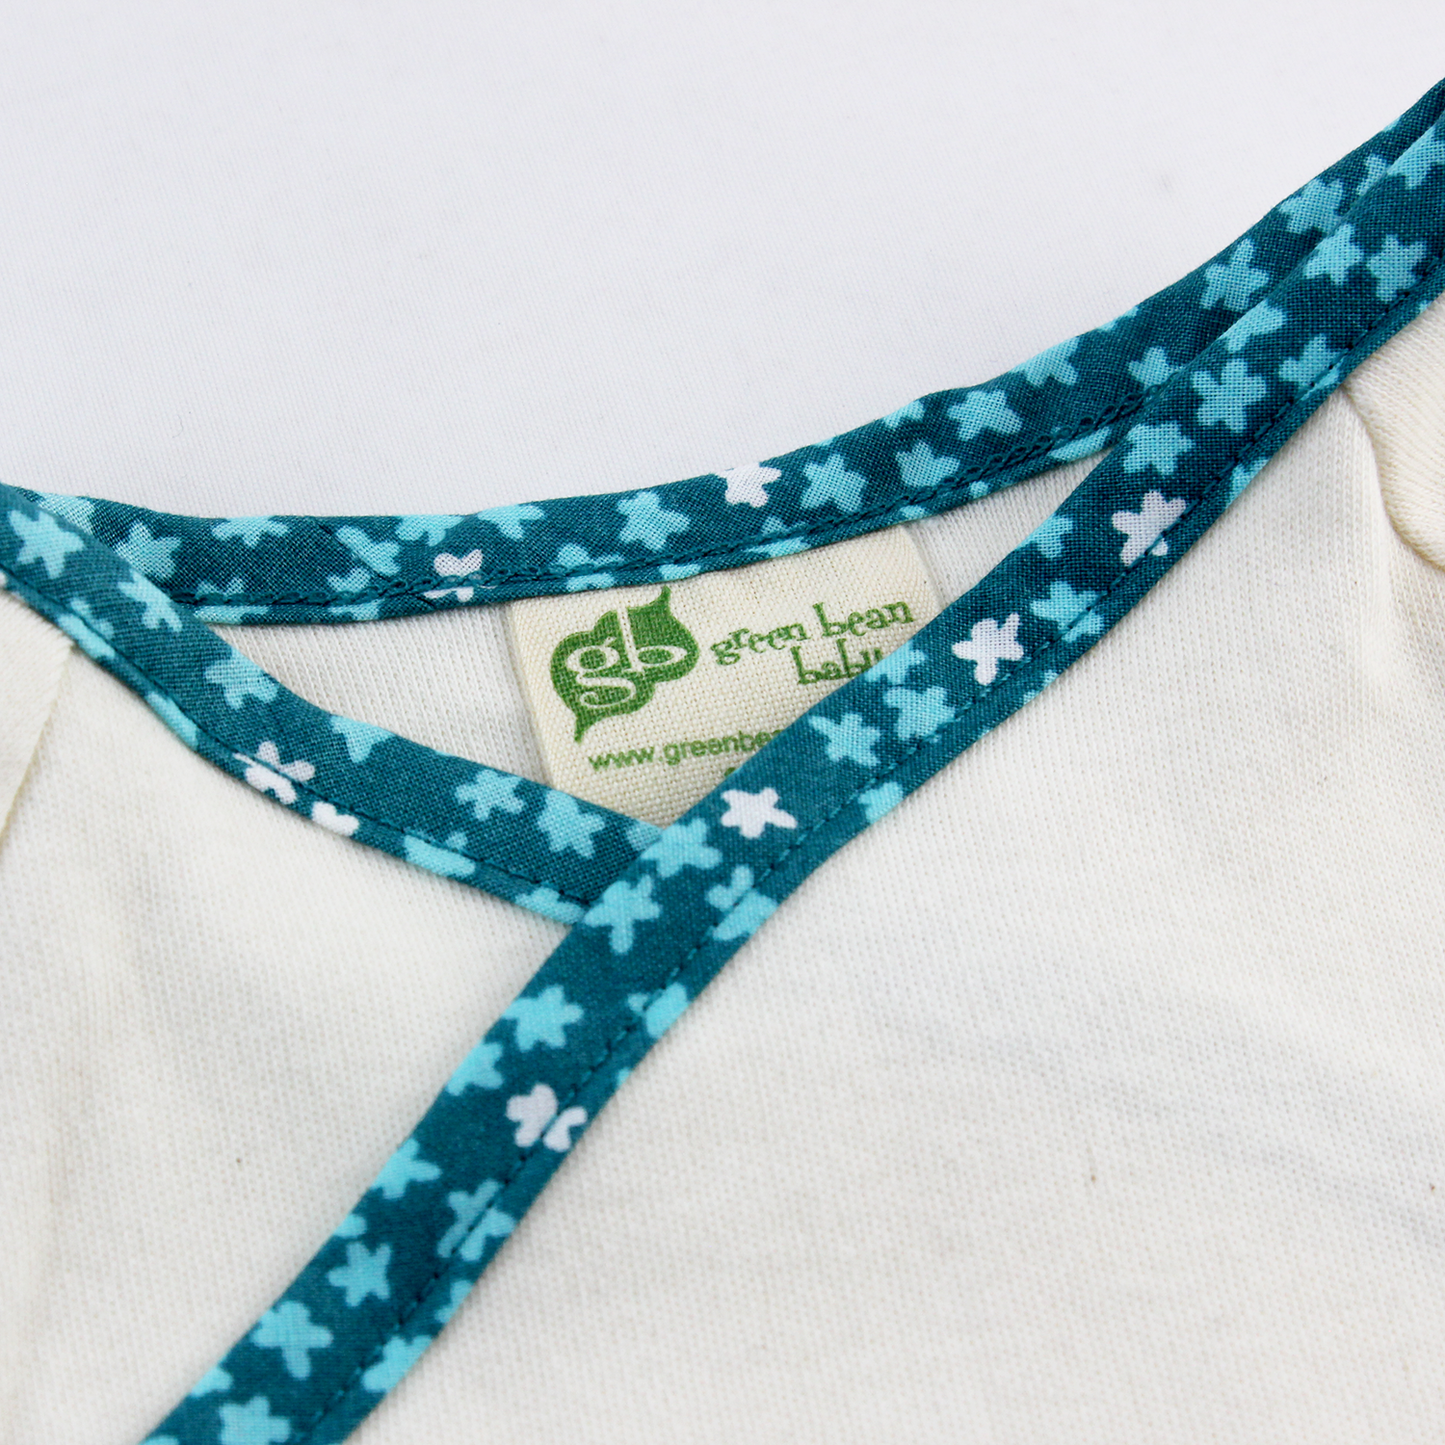 Green Bean Baby Organic Kimono Shirt with Ocean Leaves Trim